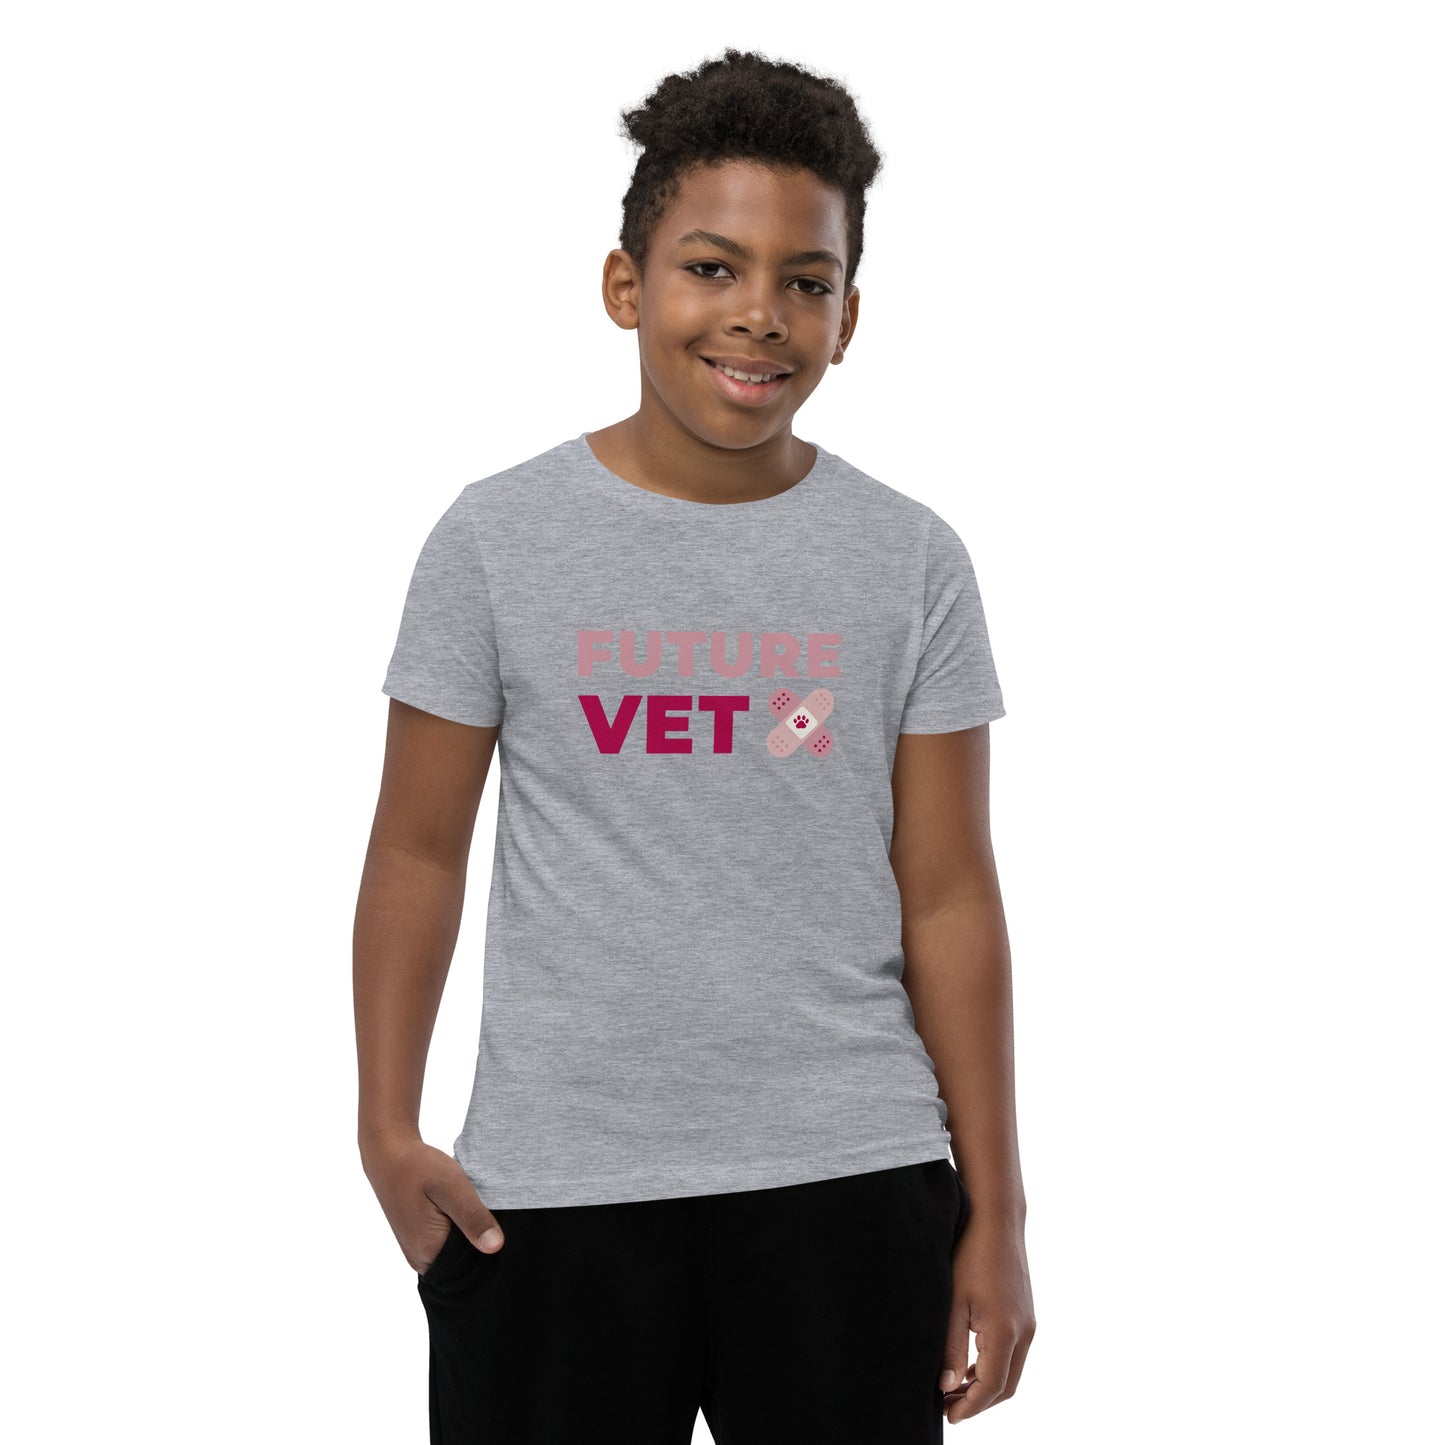 Future Vet Youth Short Sleeve T-Shirt